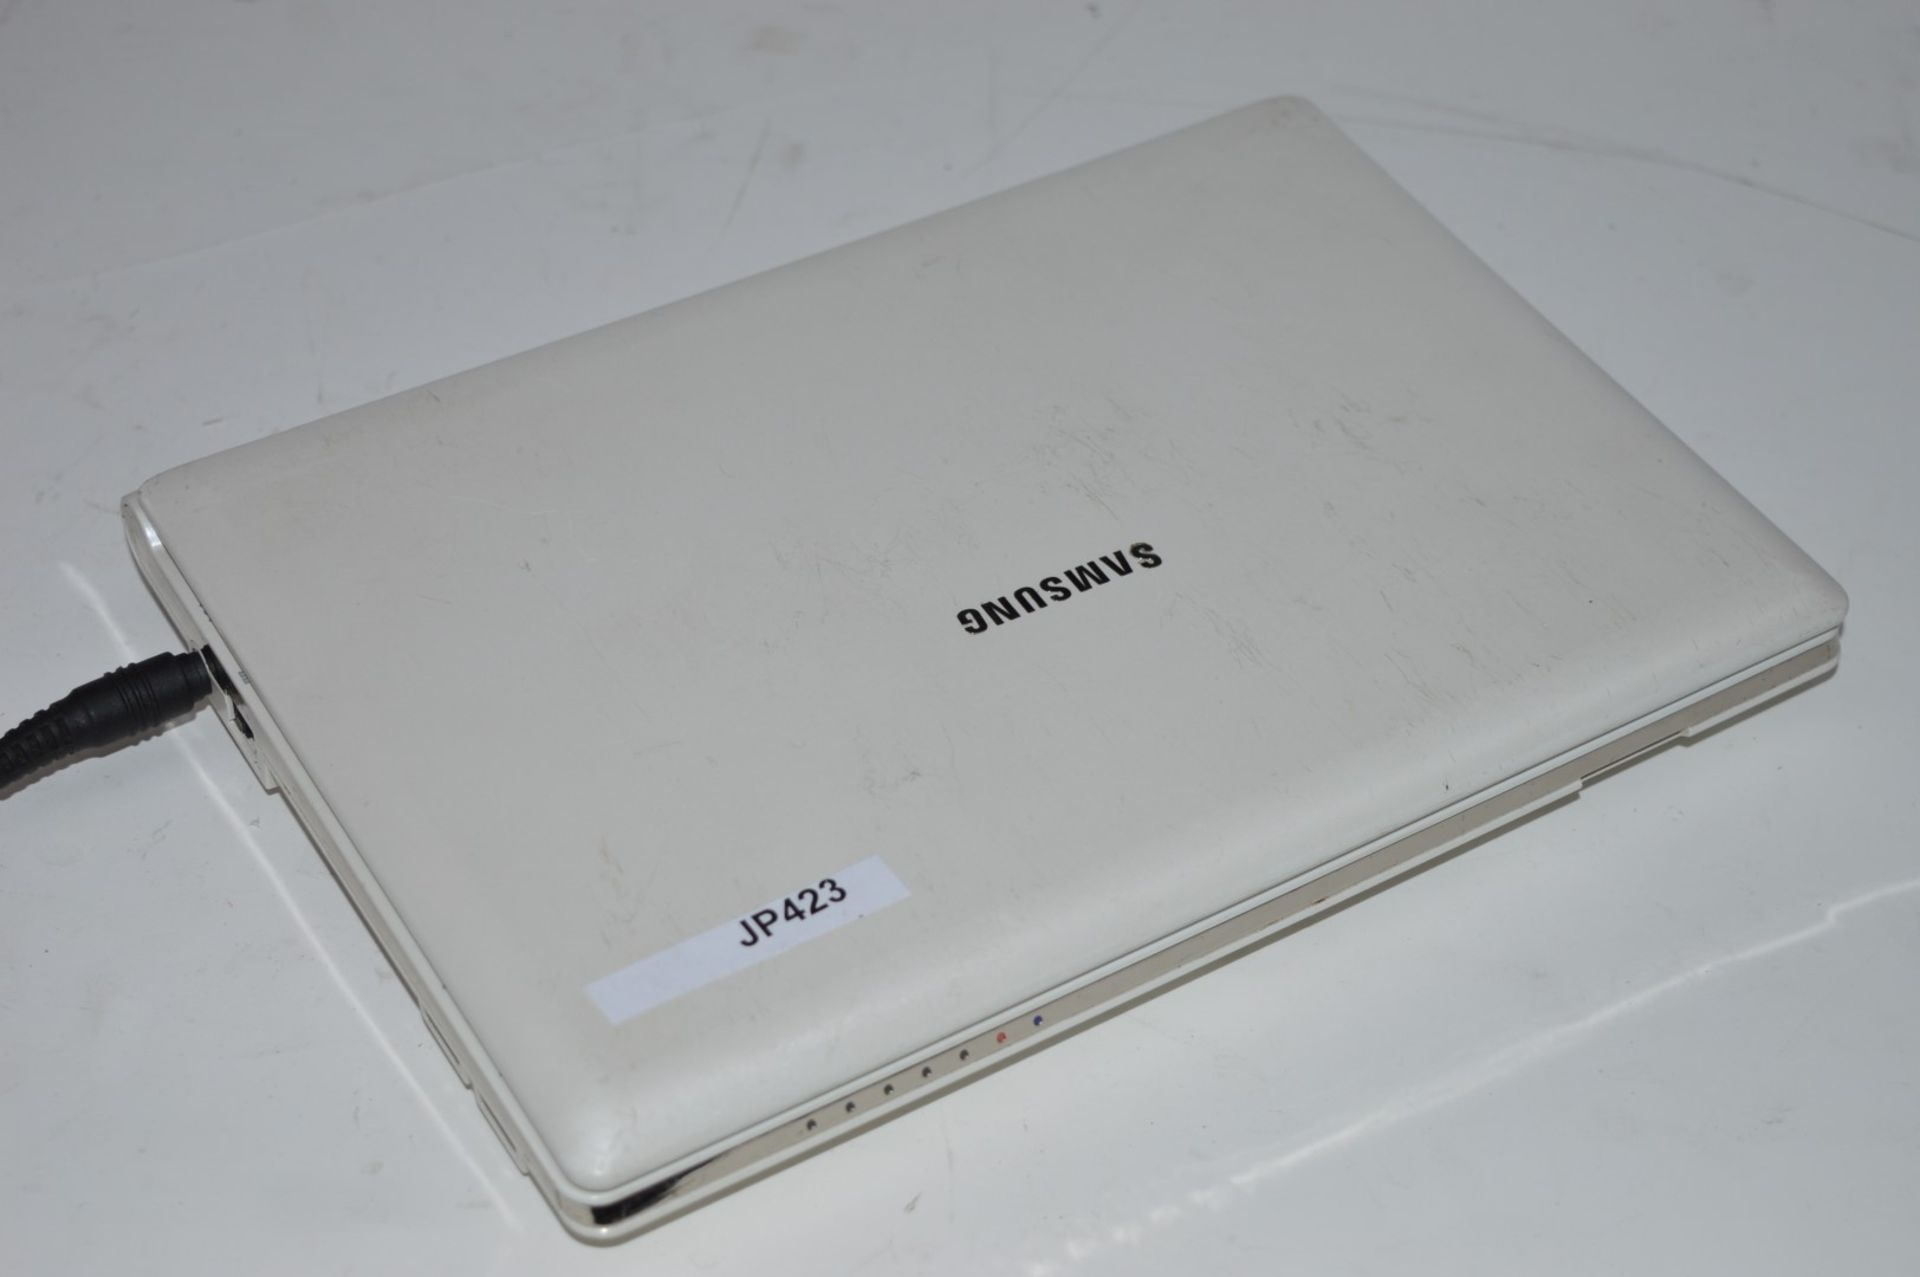 1 x Samsung NP-NC10 Netbook Computer - 10.2 Inch Screen, 1gb Ram, 1.6ghz Atom Processor, 80gfb - Image 5 of 5